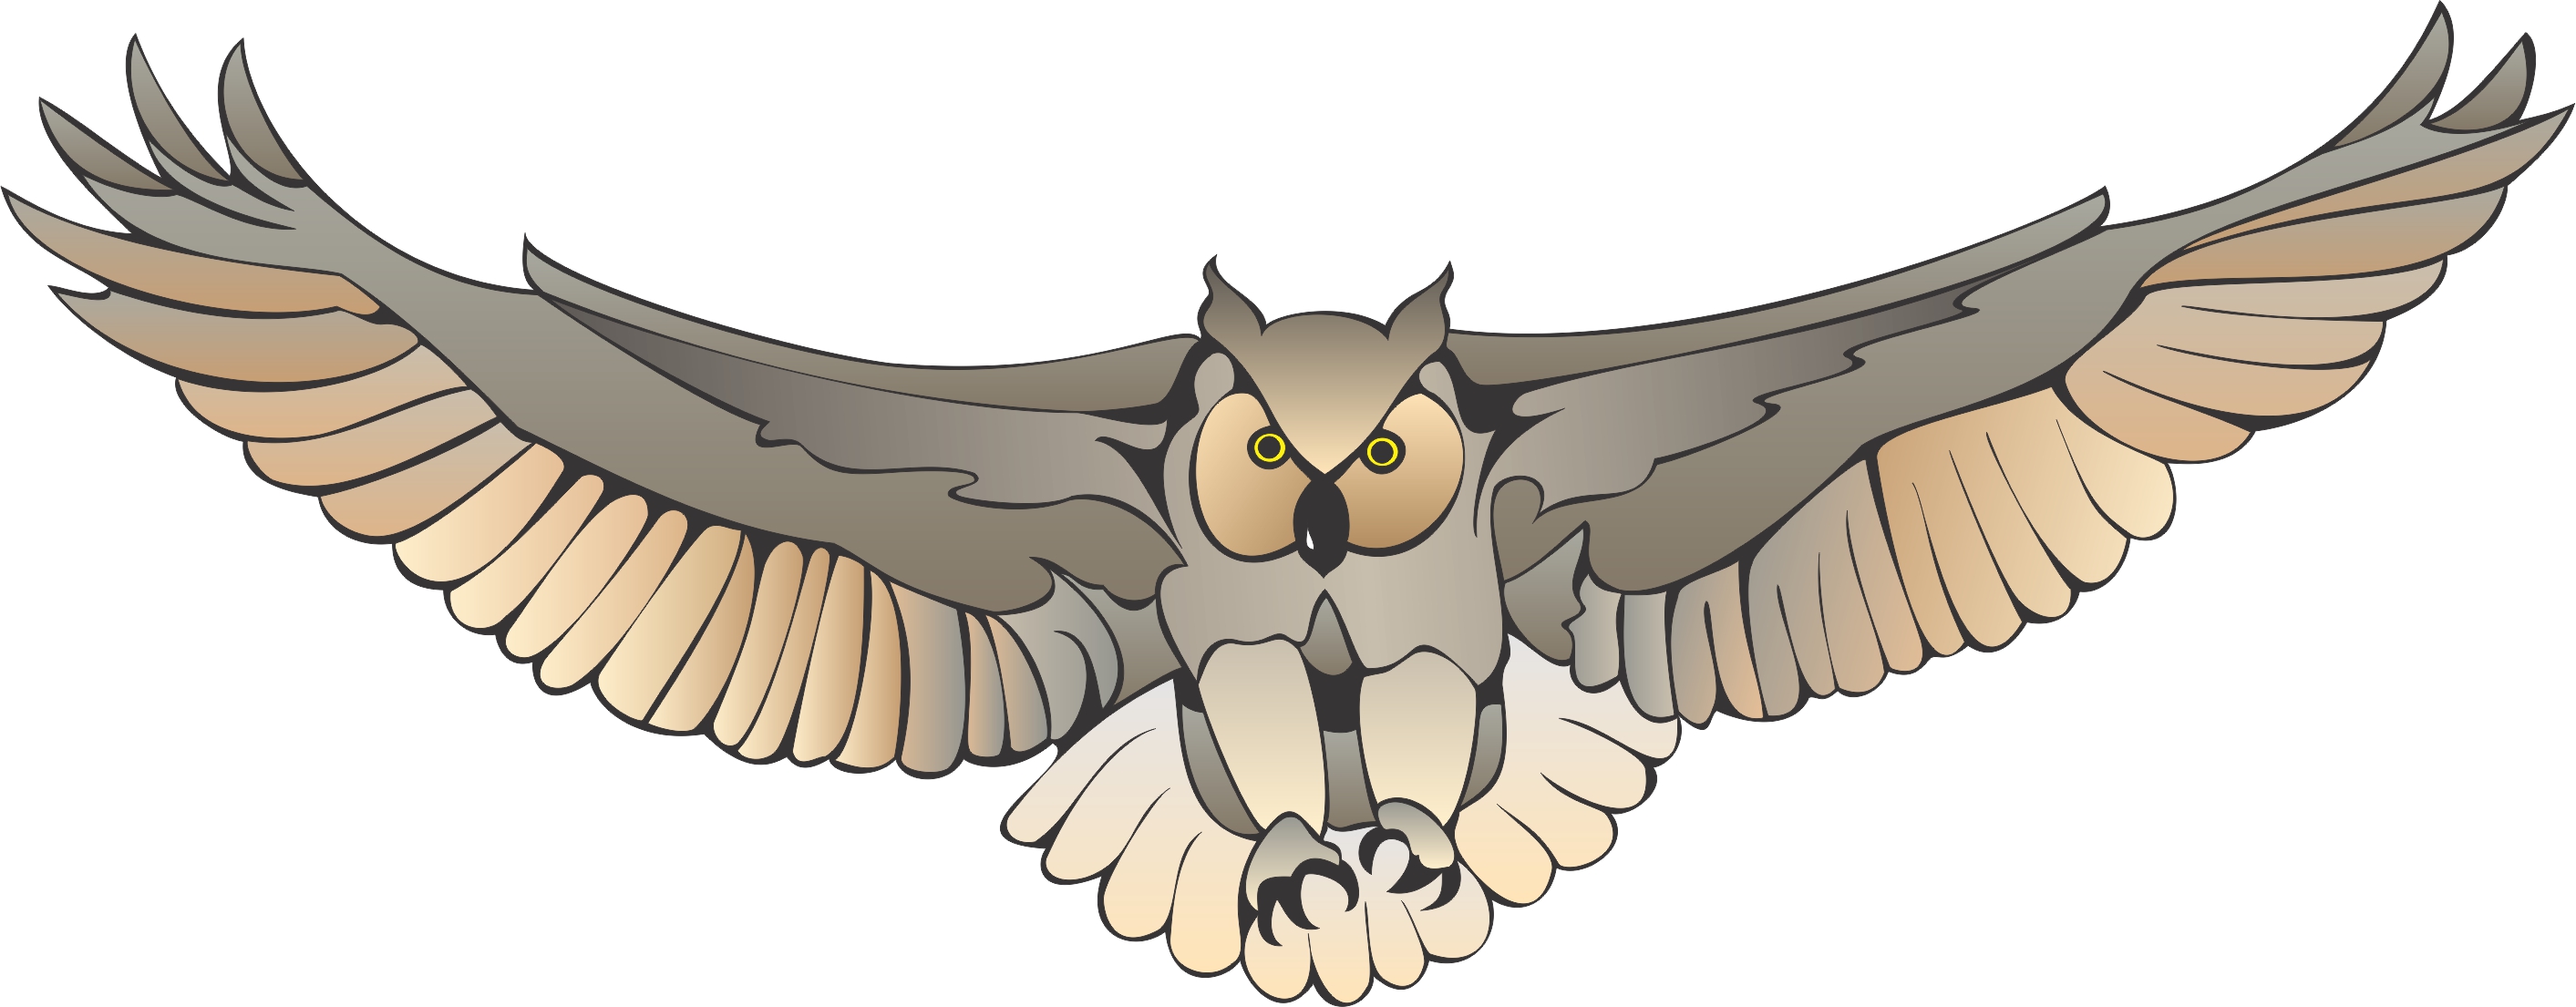 Flying Owl Clipart   Clipart Best   Clipart Best